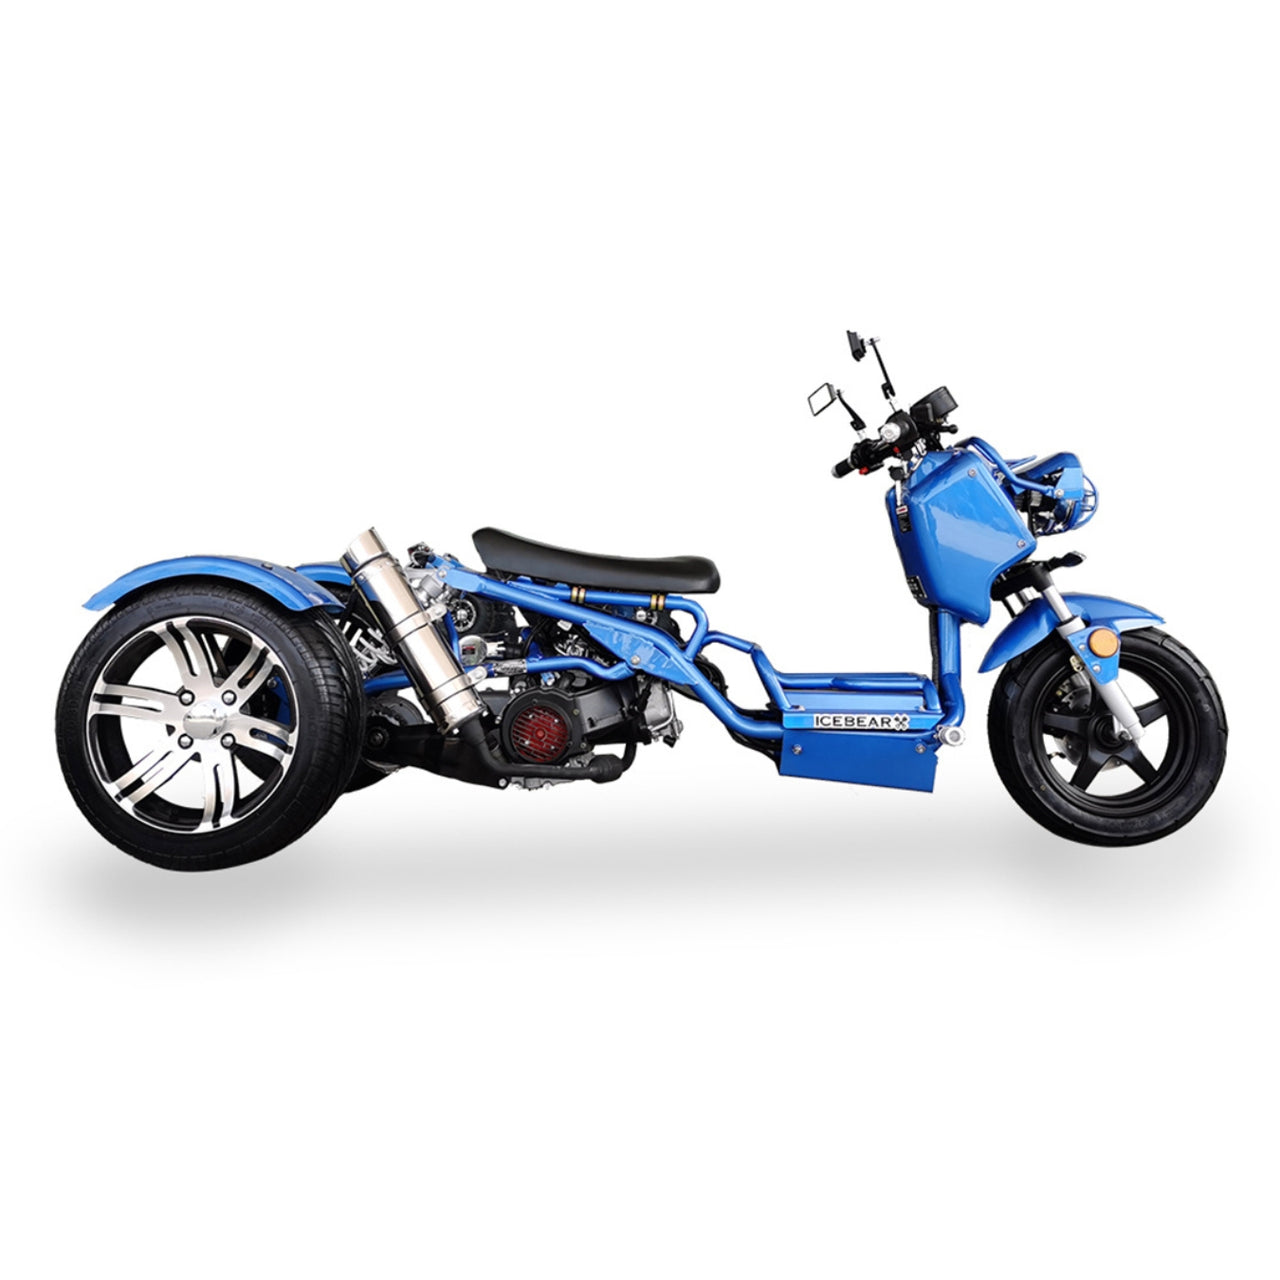 IceBear Maddog Trike 150cc Motorcycle